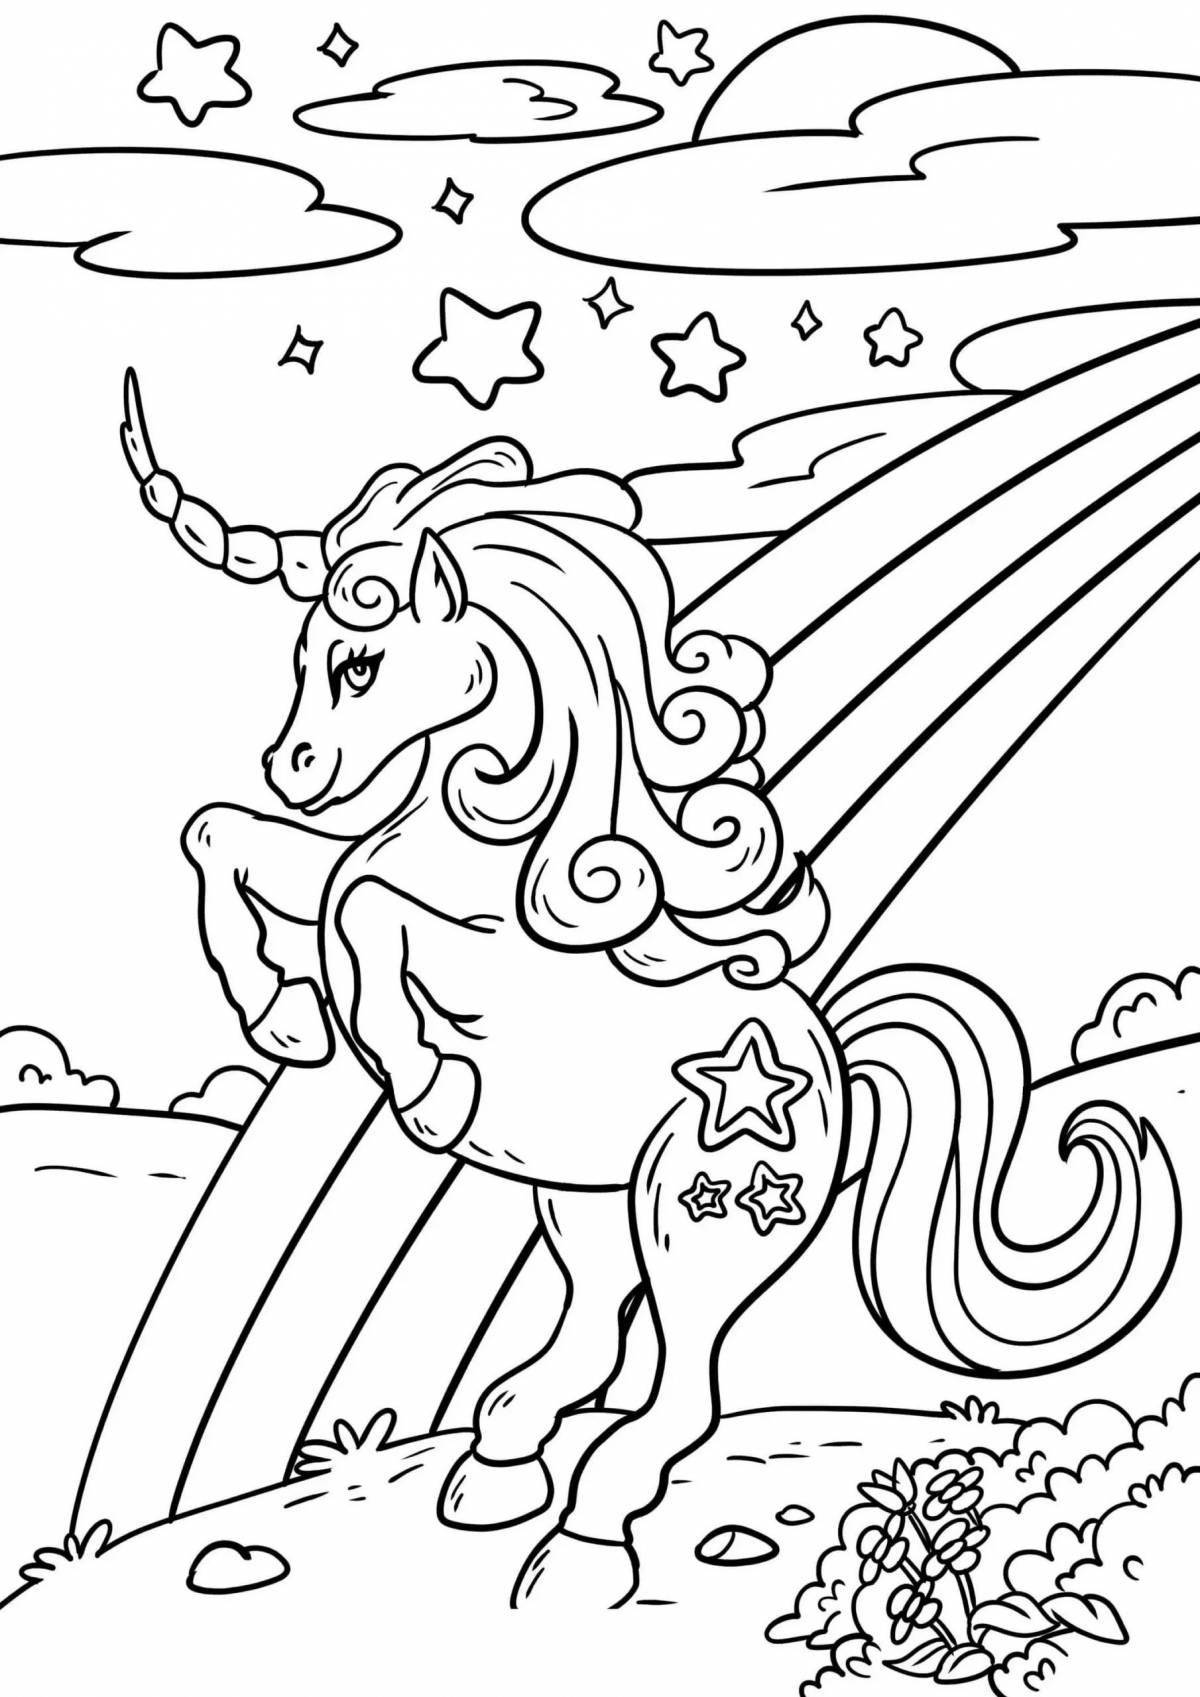 Great coloring book include unicorns